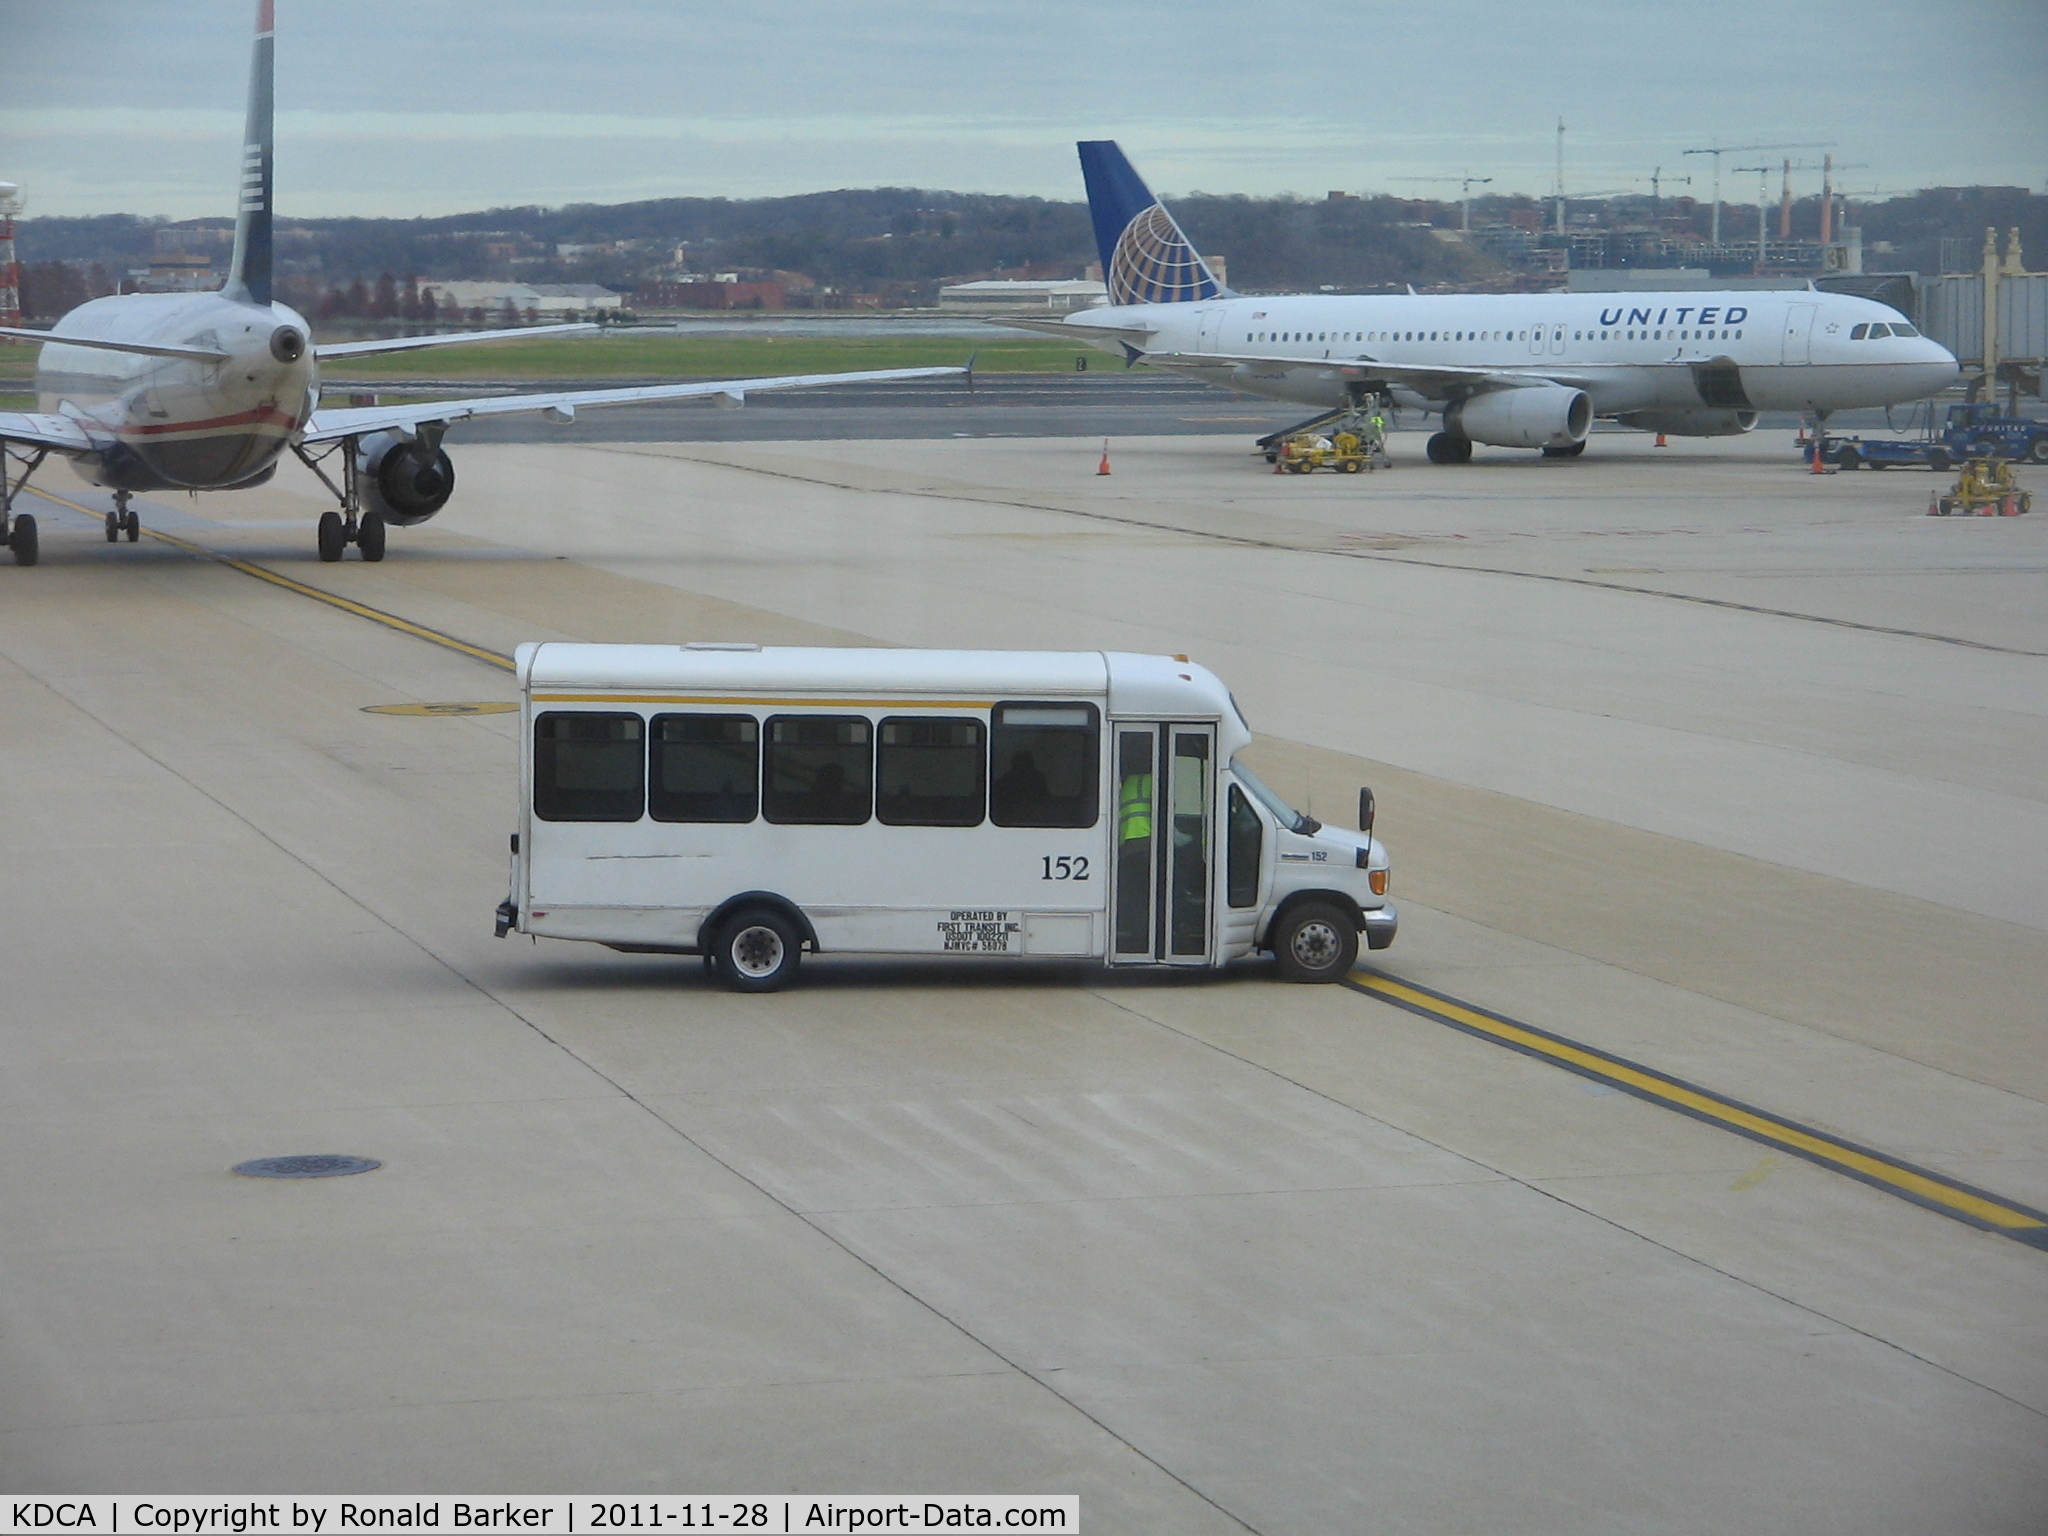 Ronald Reagan Washington National Airport (DCA) - Bus 152 on the ramp